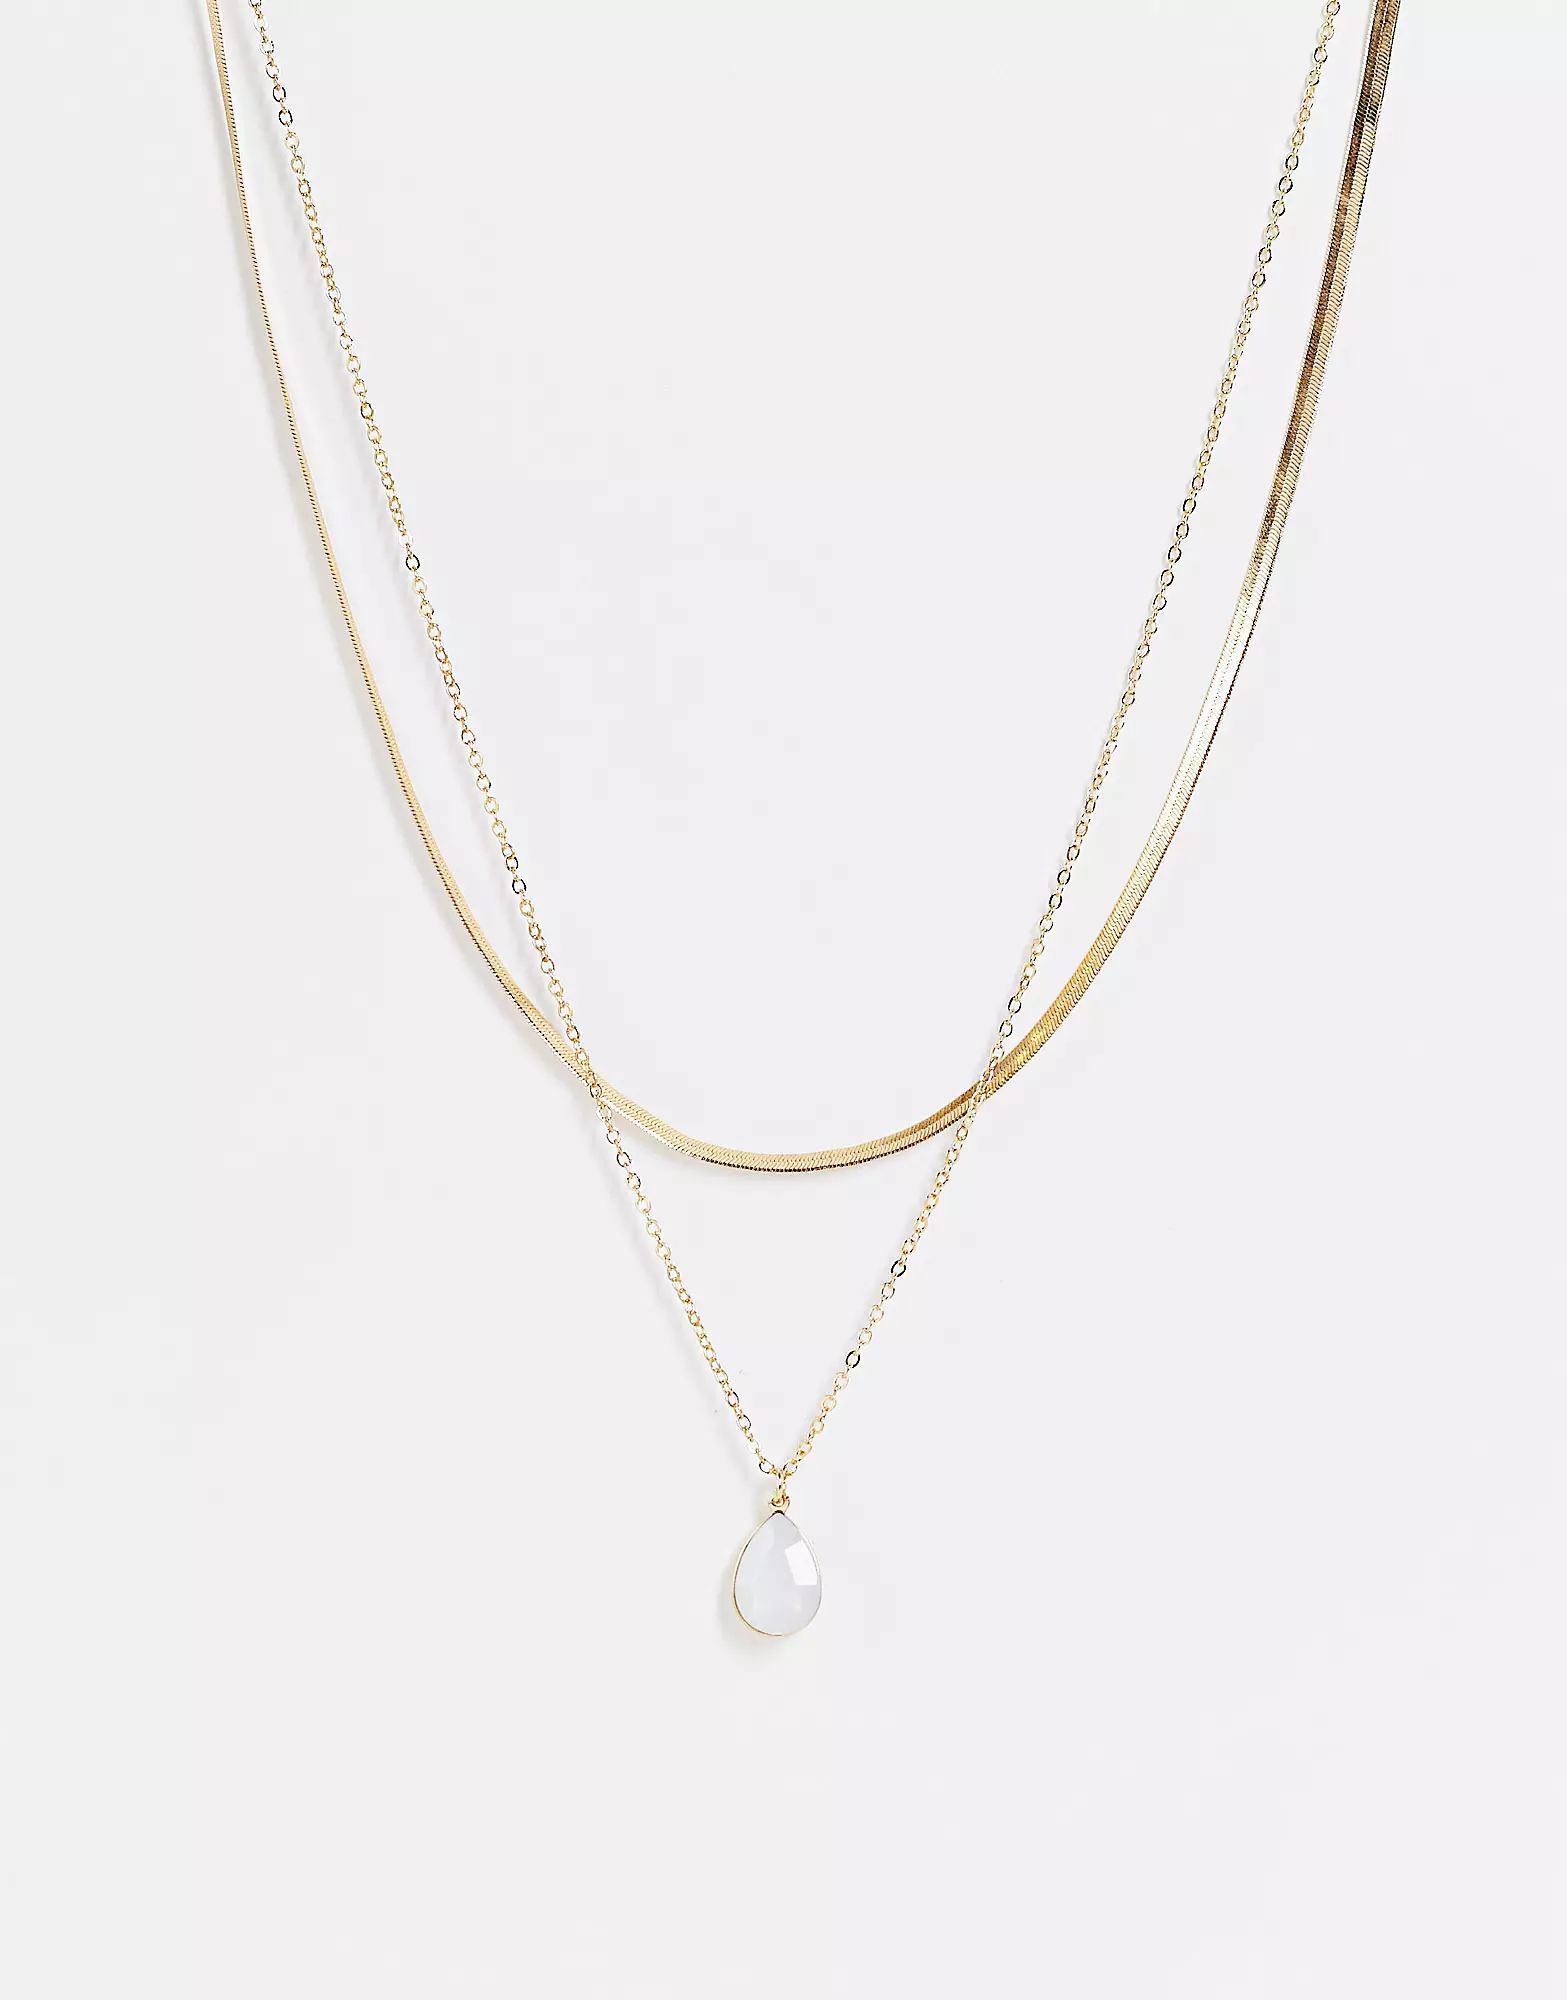 DesignB London multirow necklace with semi precious stone in gold tone | ASOS (Global)